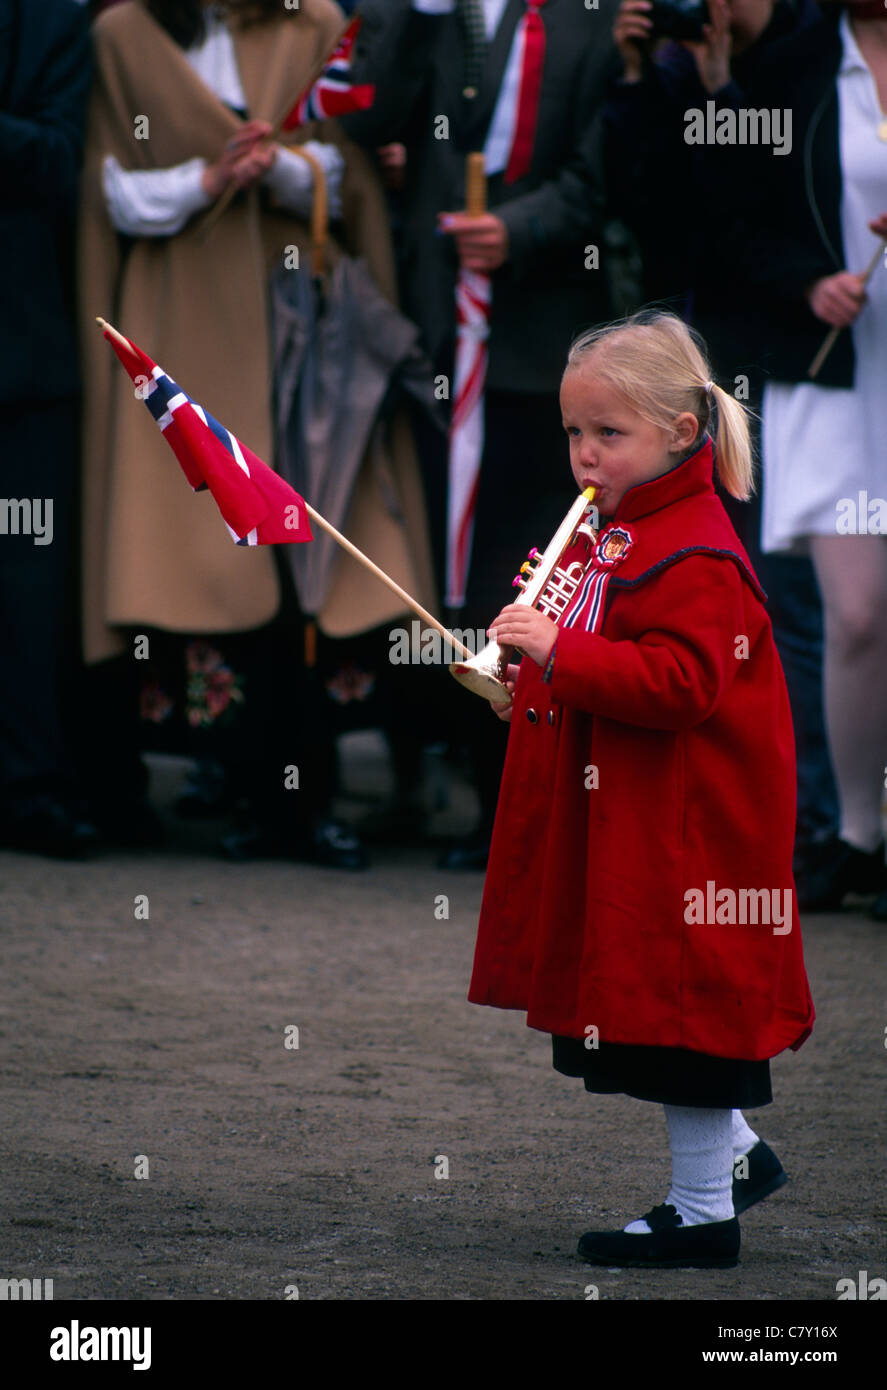 Little Girl celebrating National Day Stock Photo